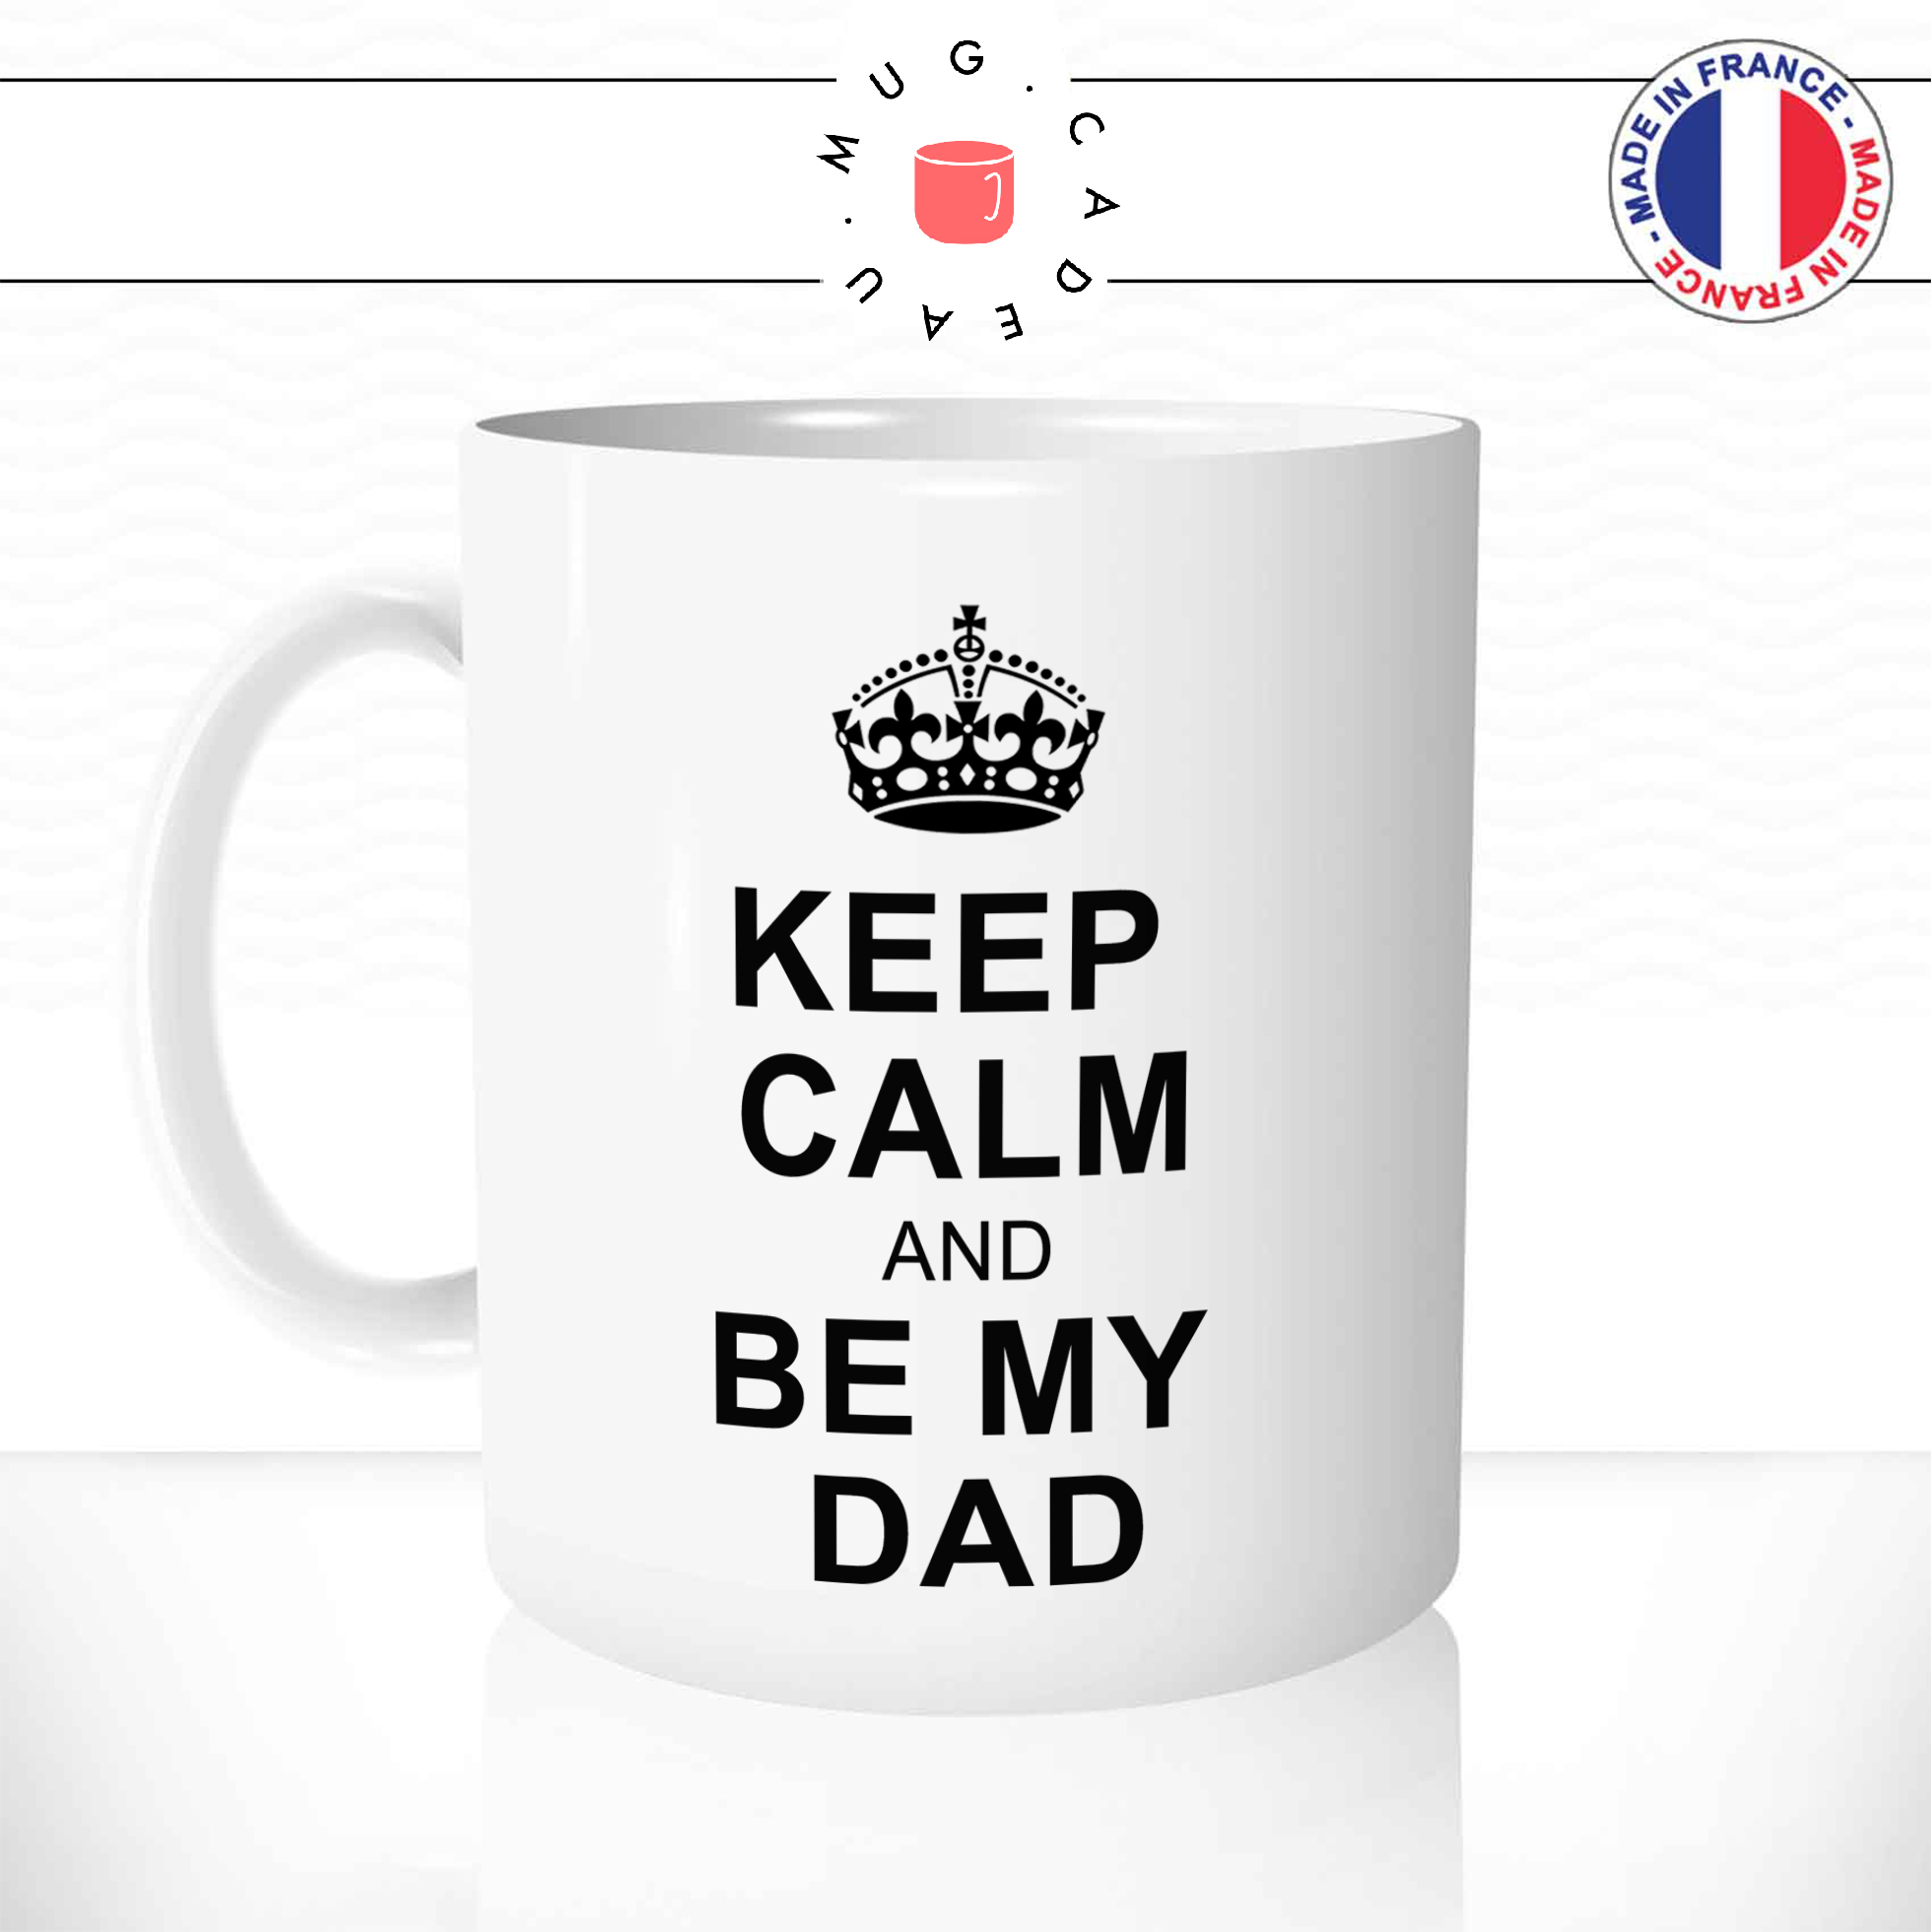 mug-tasse-ref6-keep-calm-be-my-dad-cafe-the-mugs-tasses-personnalise-anse-gauche